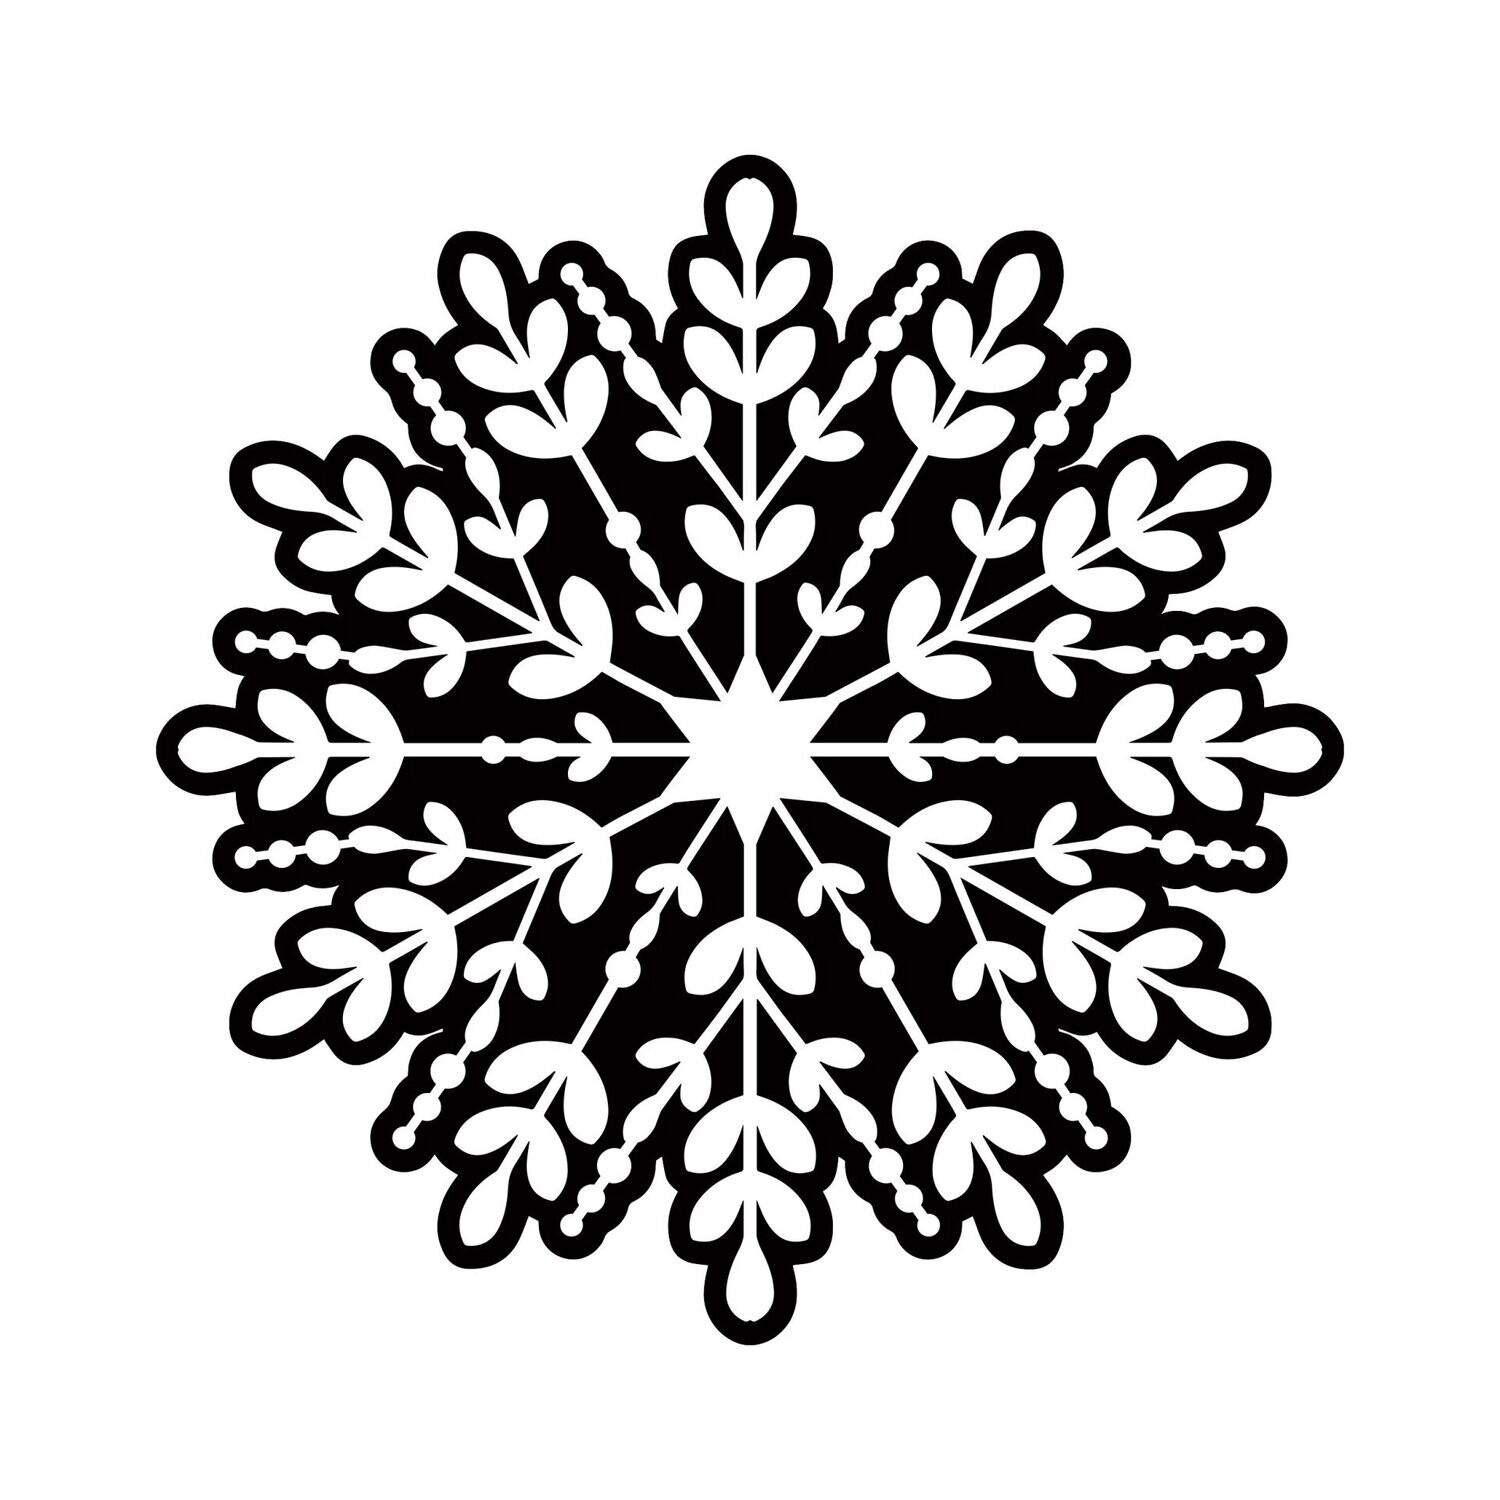 Super Sized Snowflake SVG Files